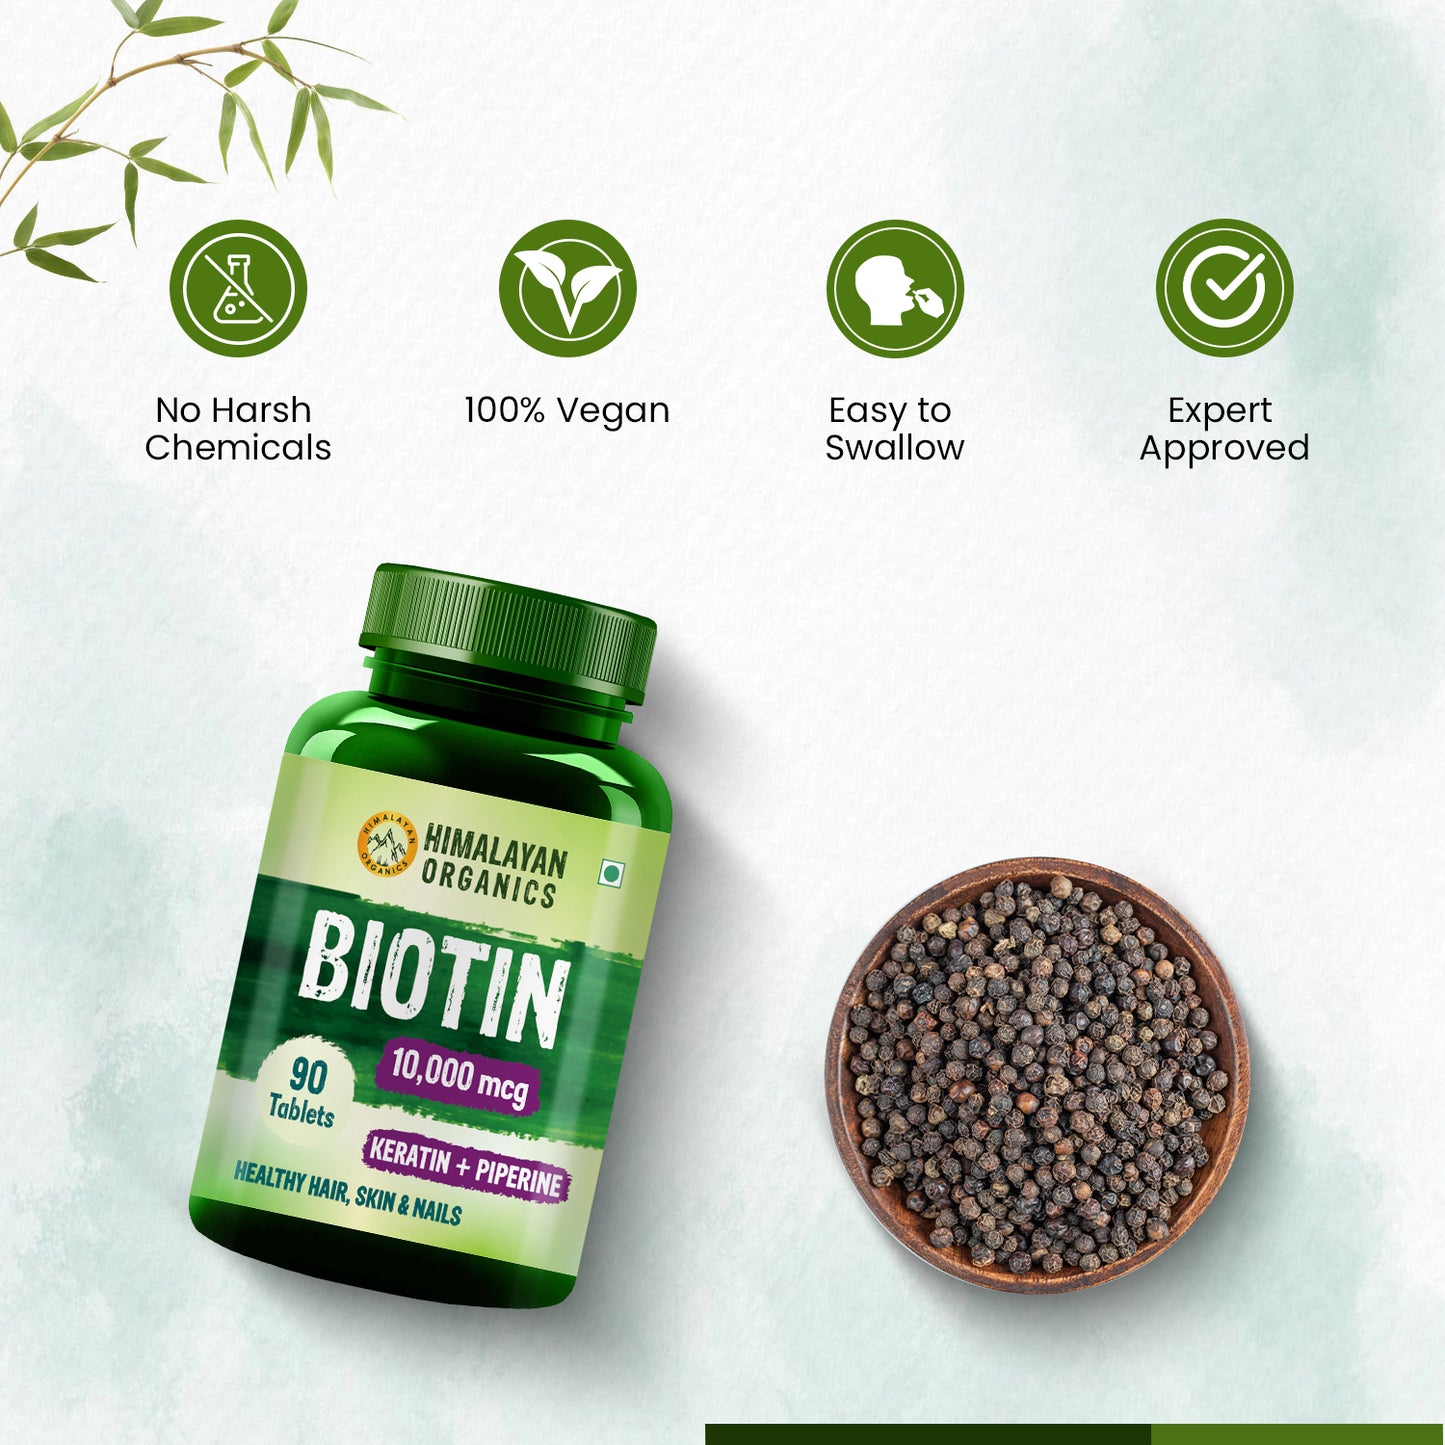 Himalayan Organics Biotin 10000mcg with Keratin + Piperine Supplement For Healthy Hair, Skin & Nails - 90 Veg Tablets